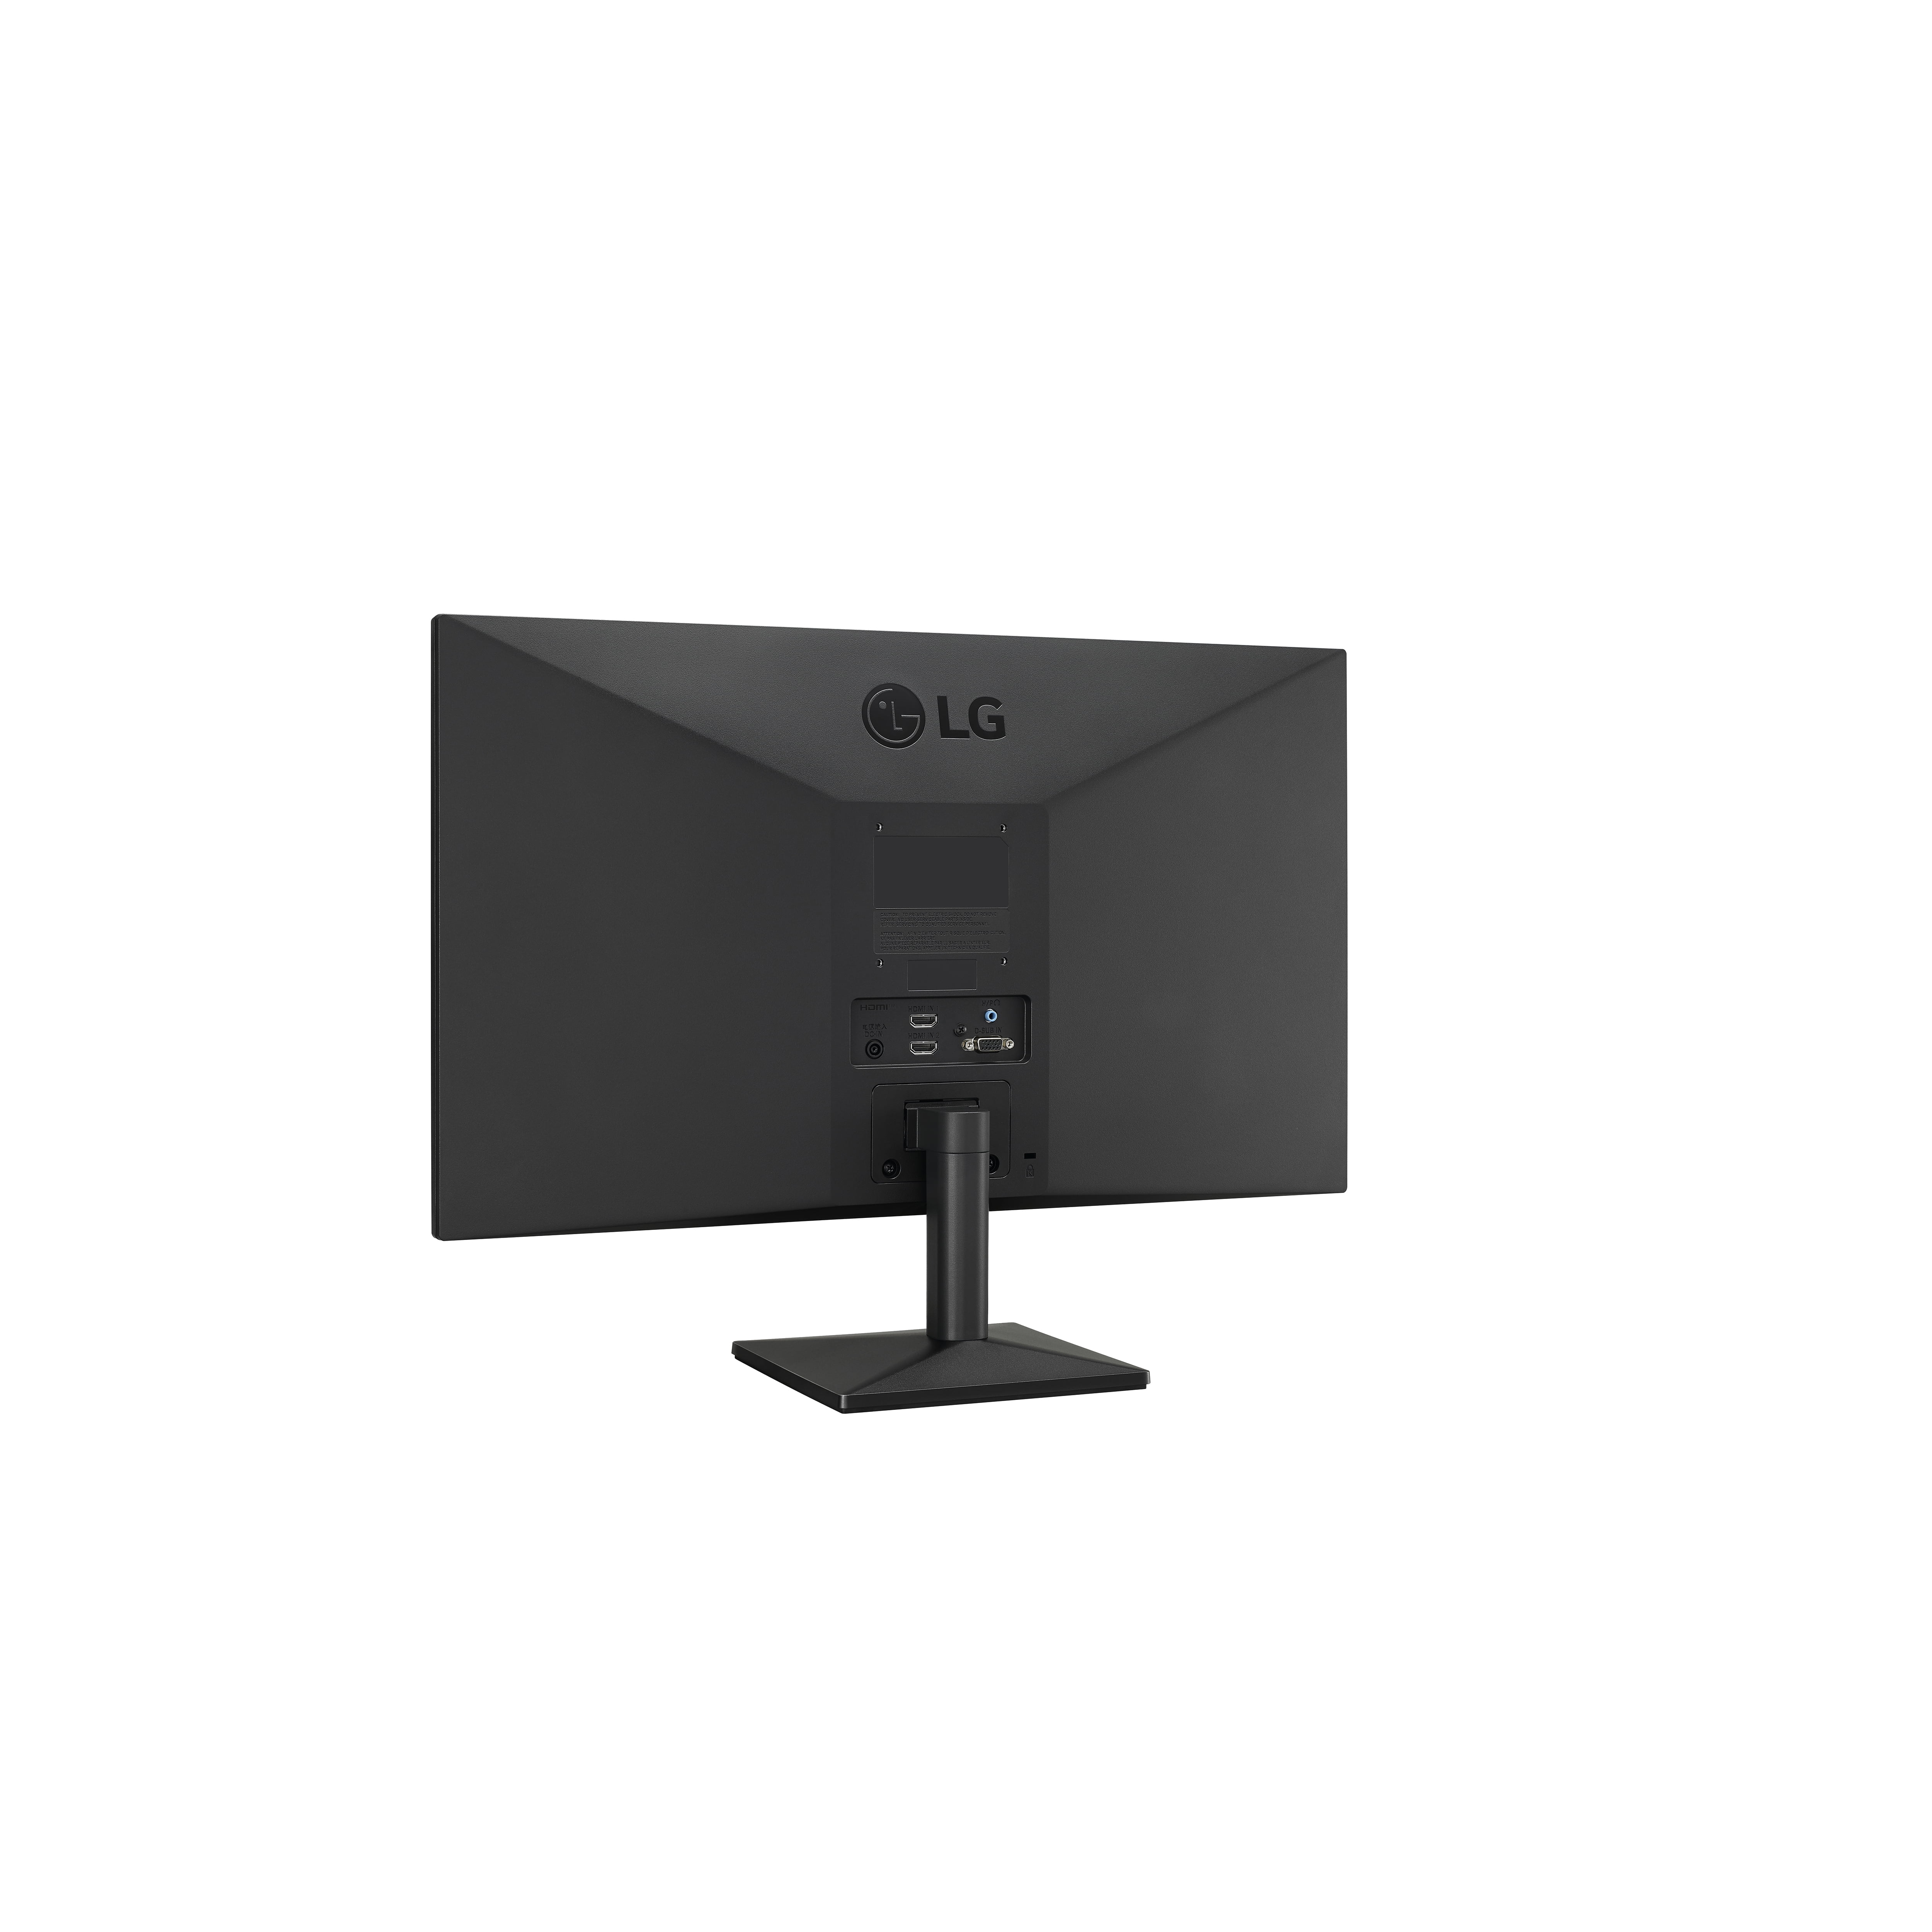 LG 22in. FHD IPS Monitor with FreeSync - Black - Walmart.com